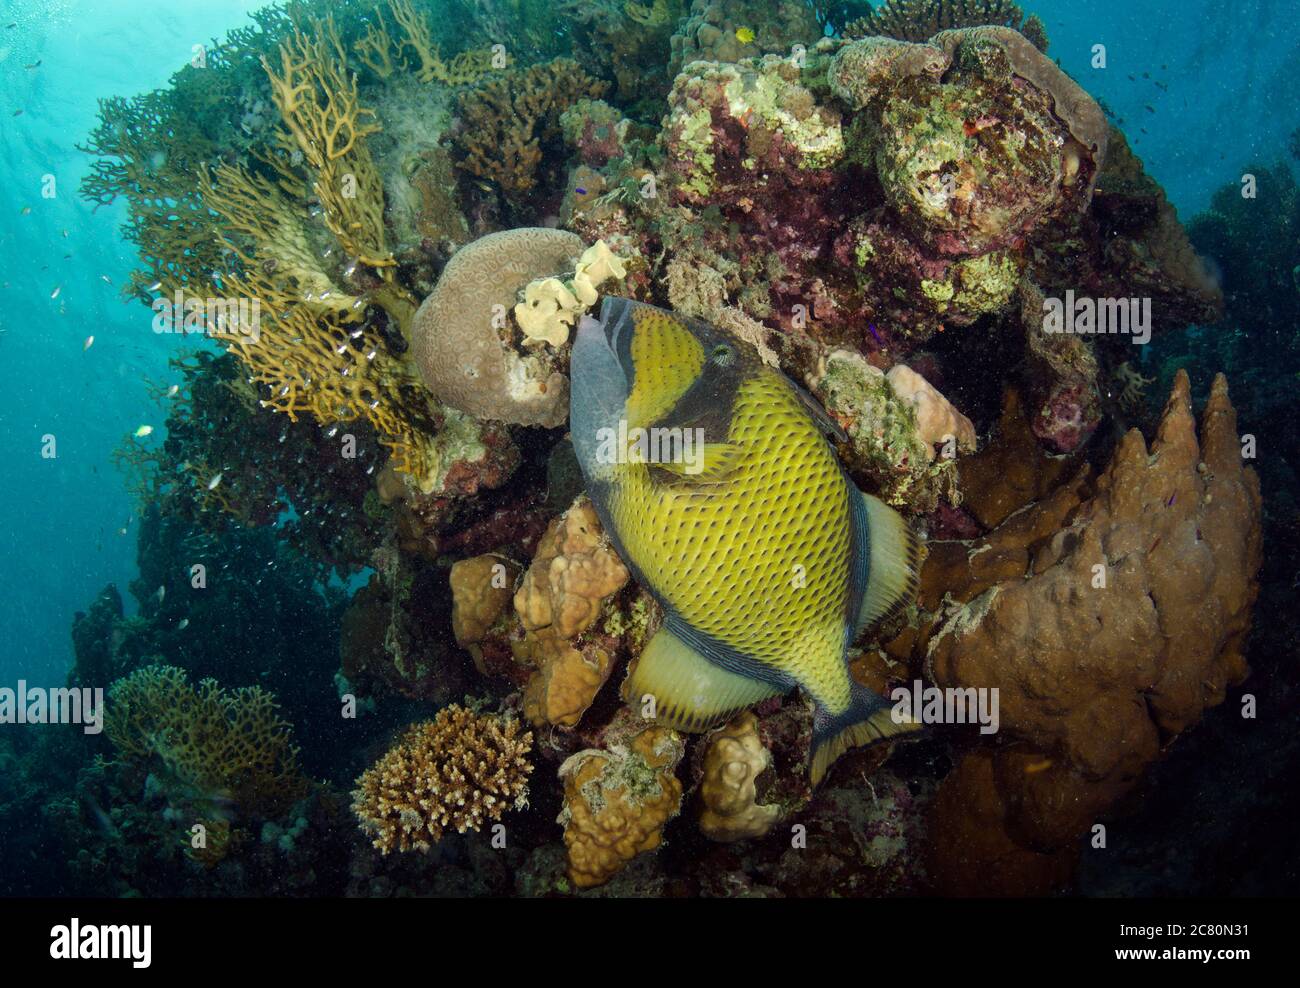 Yellowmargin triggerfish, Pseudobalistes flavimarginatus, biting sponge, on coral reef, Hamata, Egypt Stock Photo